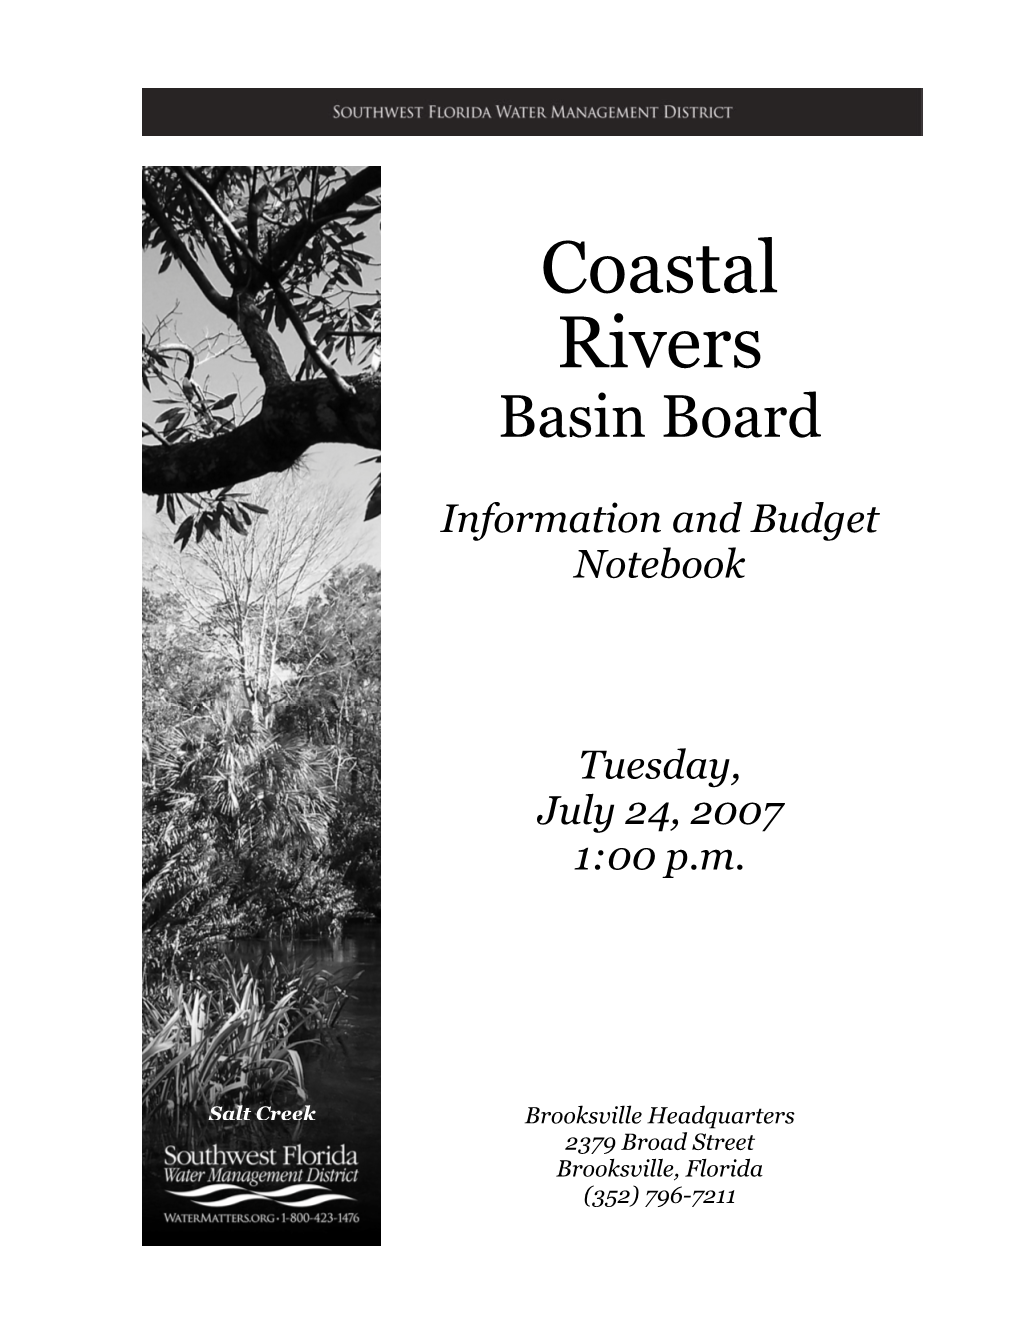 Coastal Rivers Basin Board Information Notebook